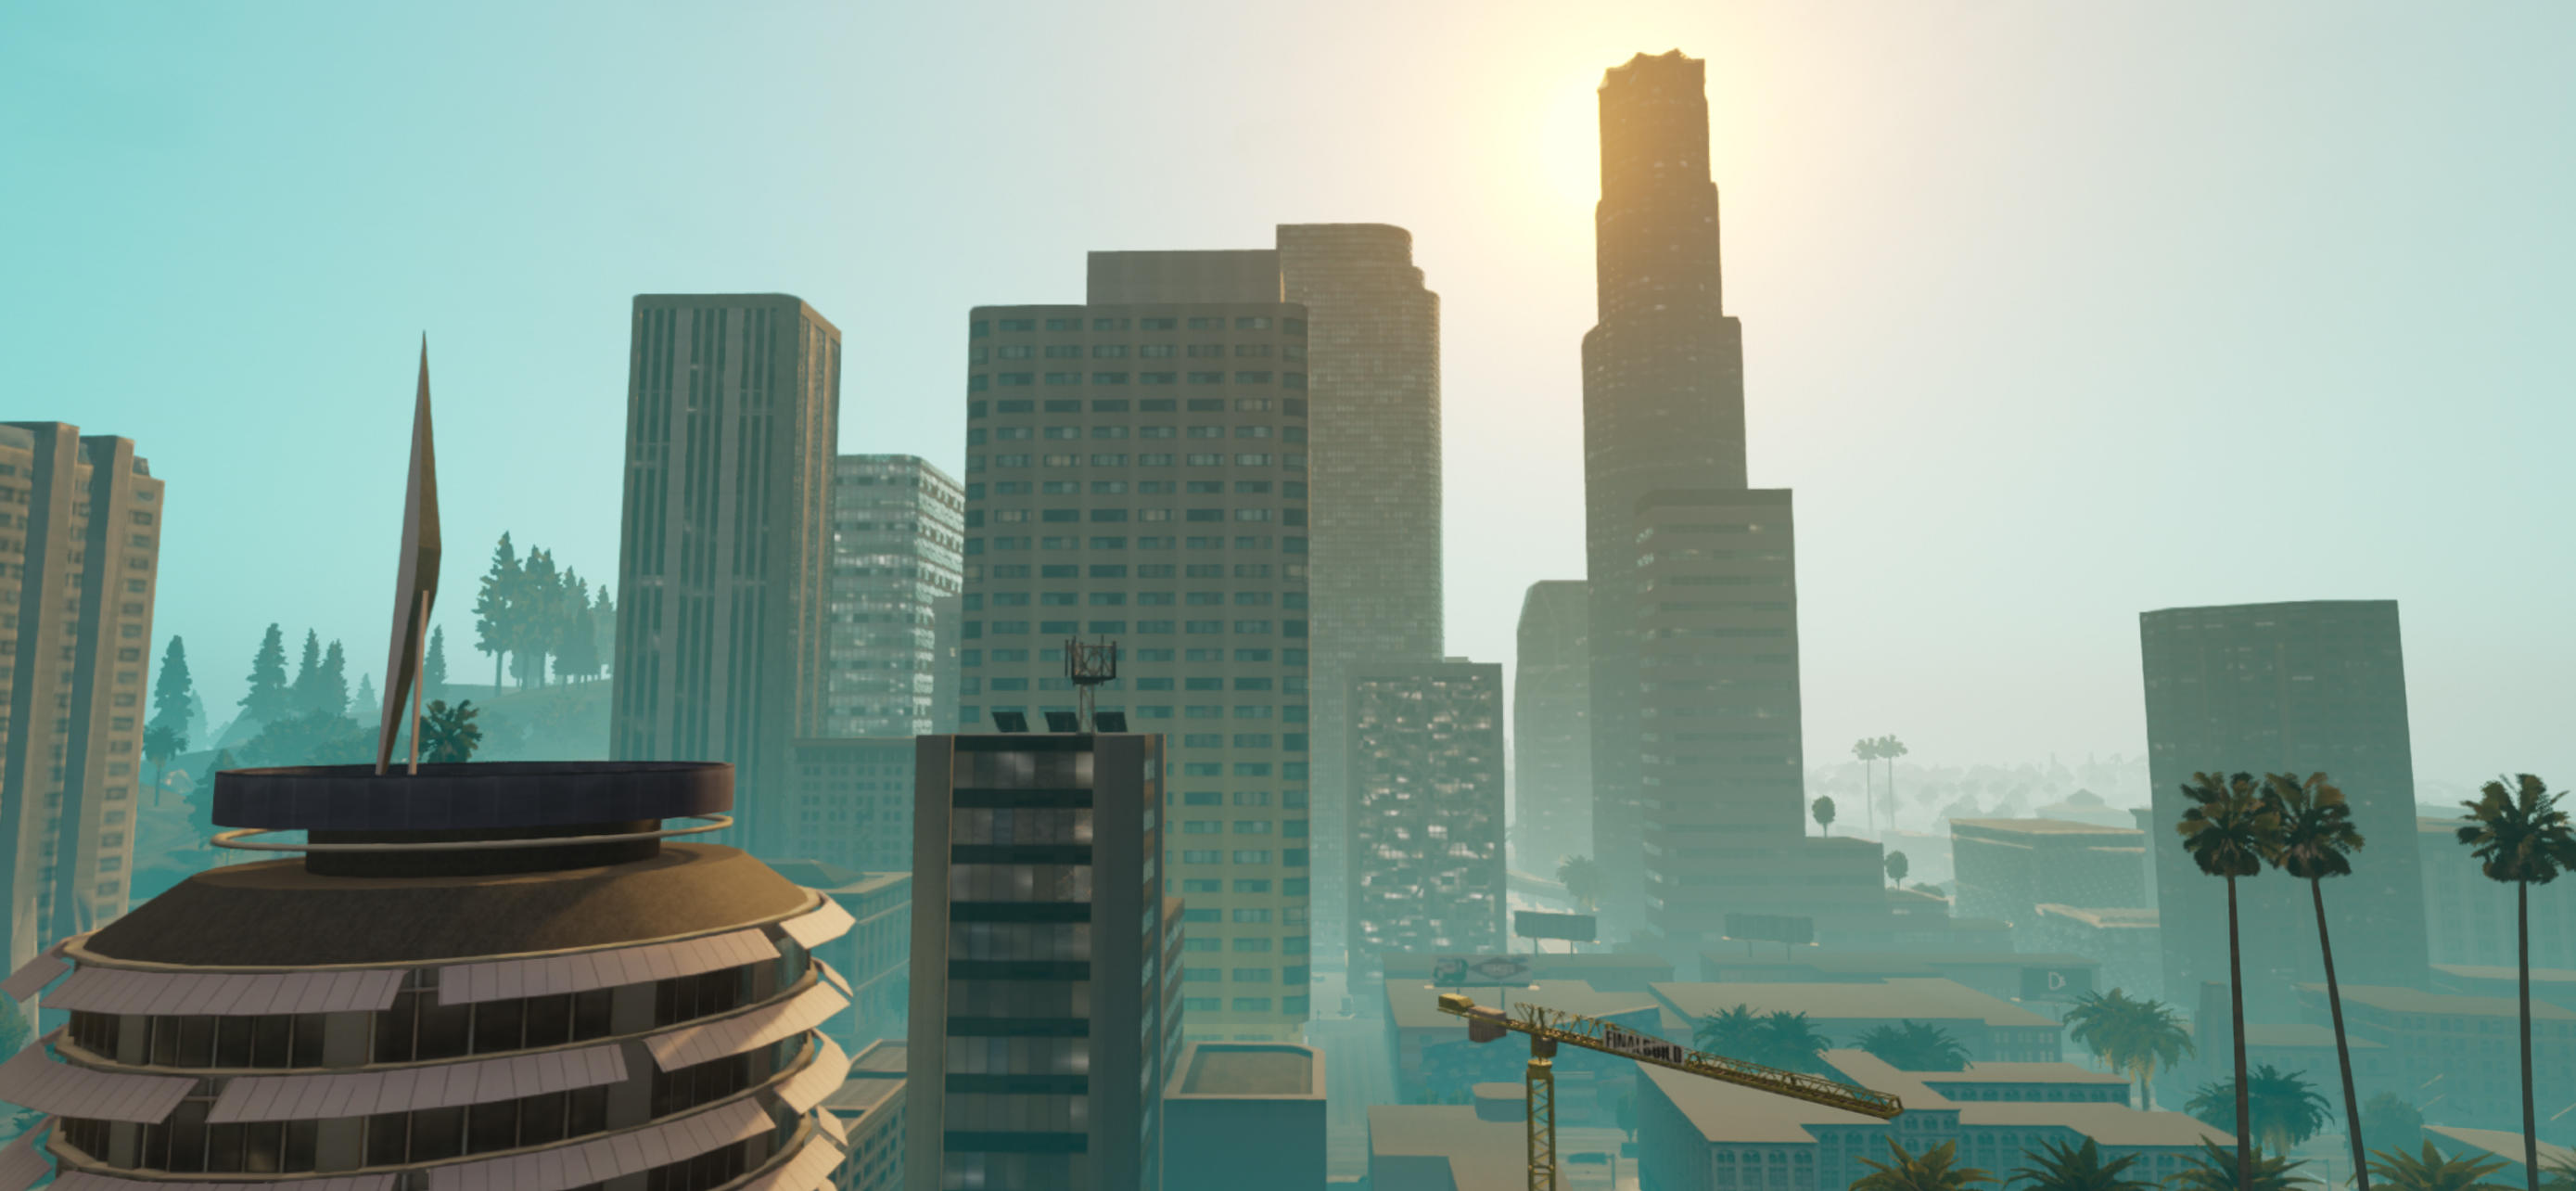 GTA: San Andreas – NETFLIX screenshot game